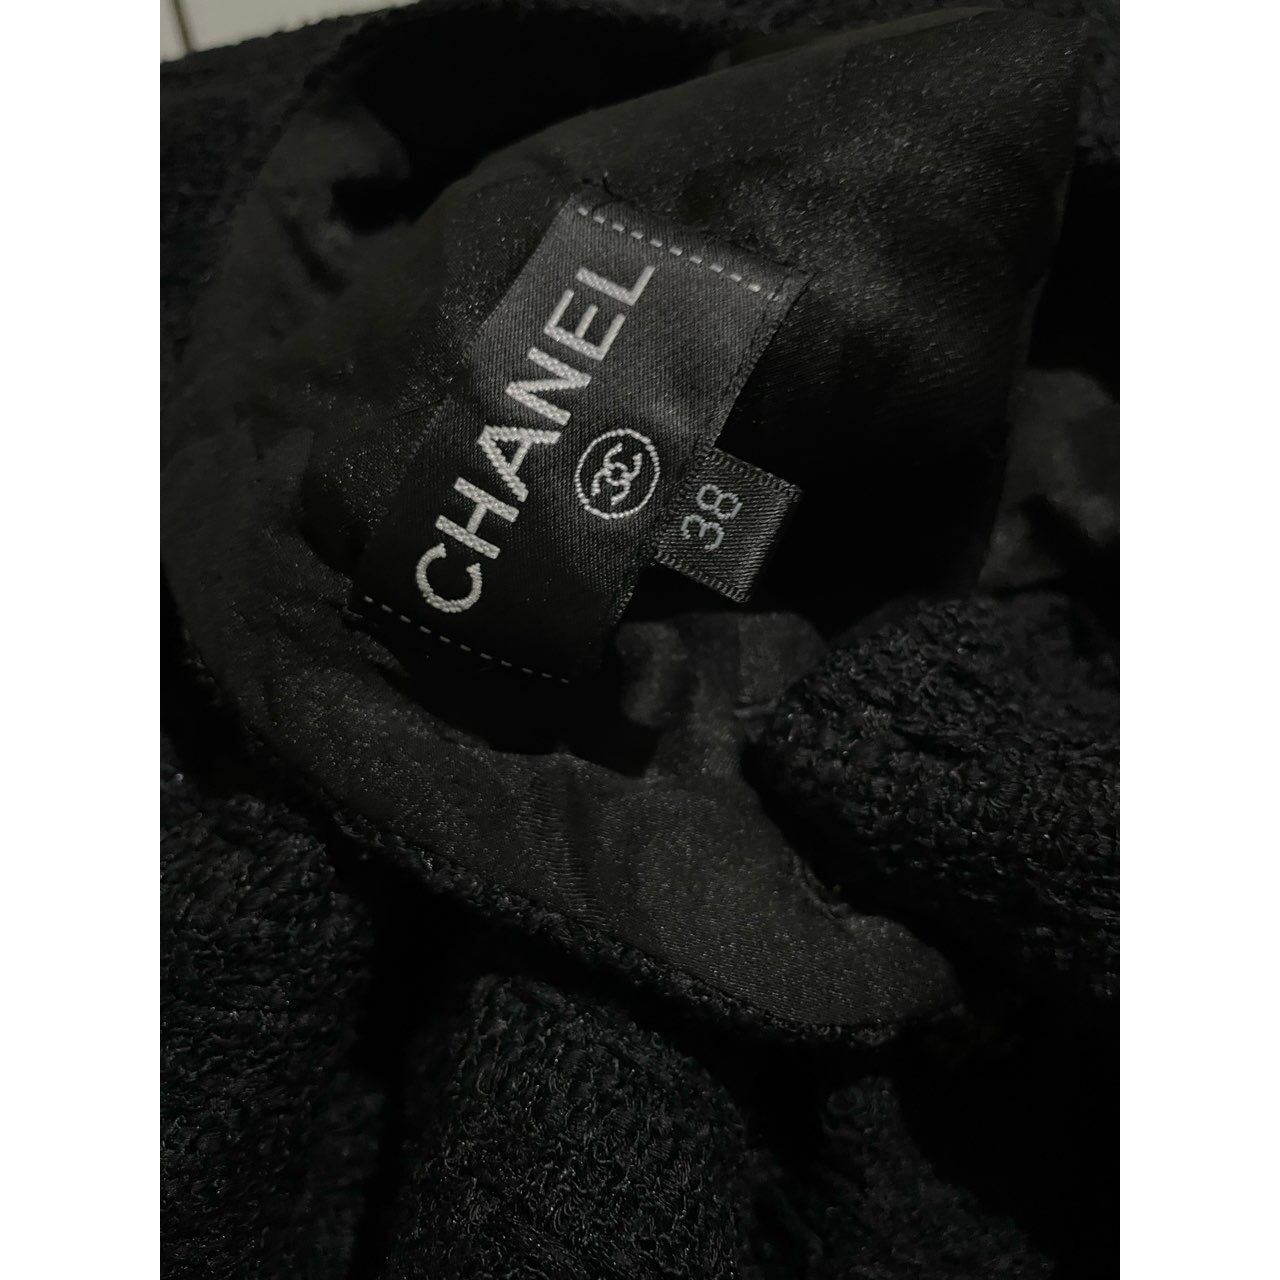 Chanel Black Blazer